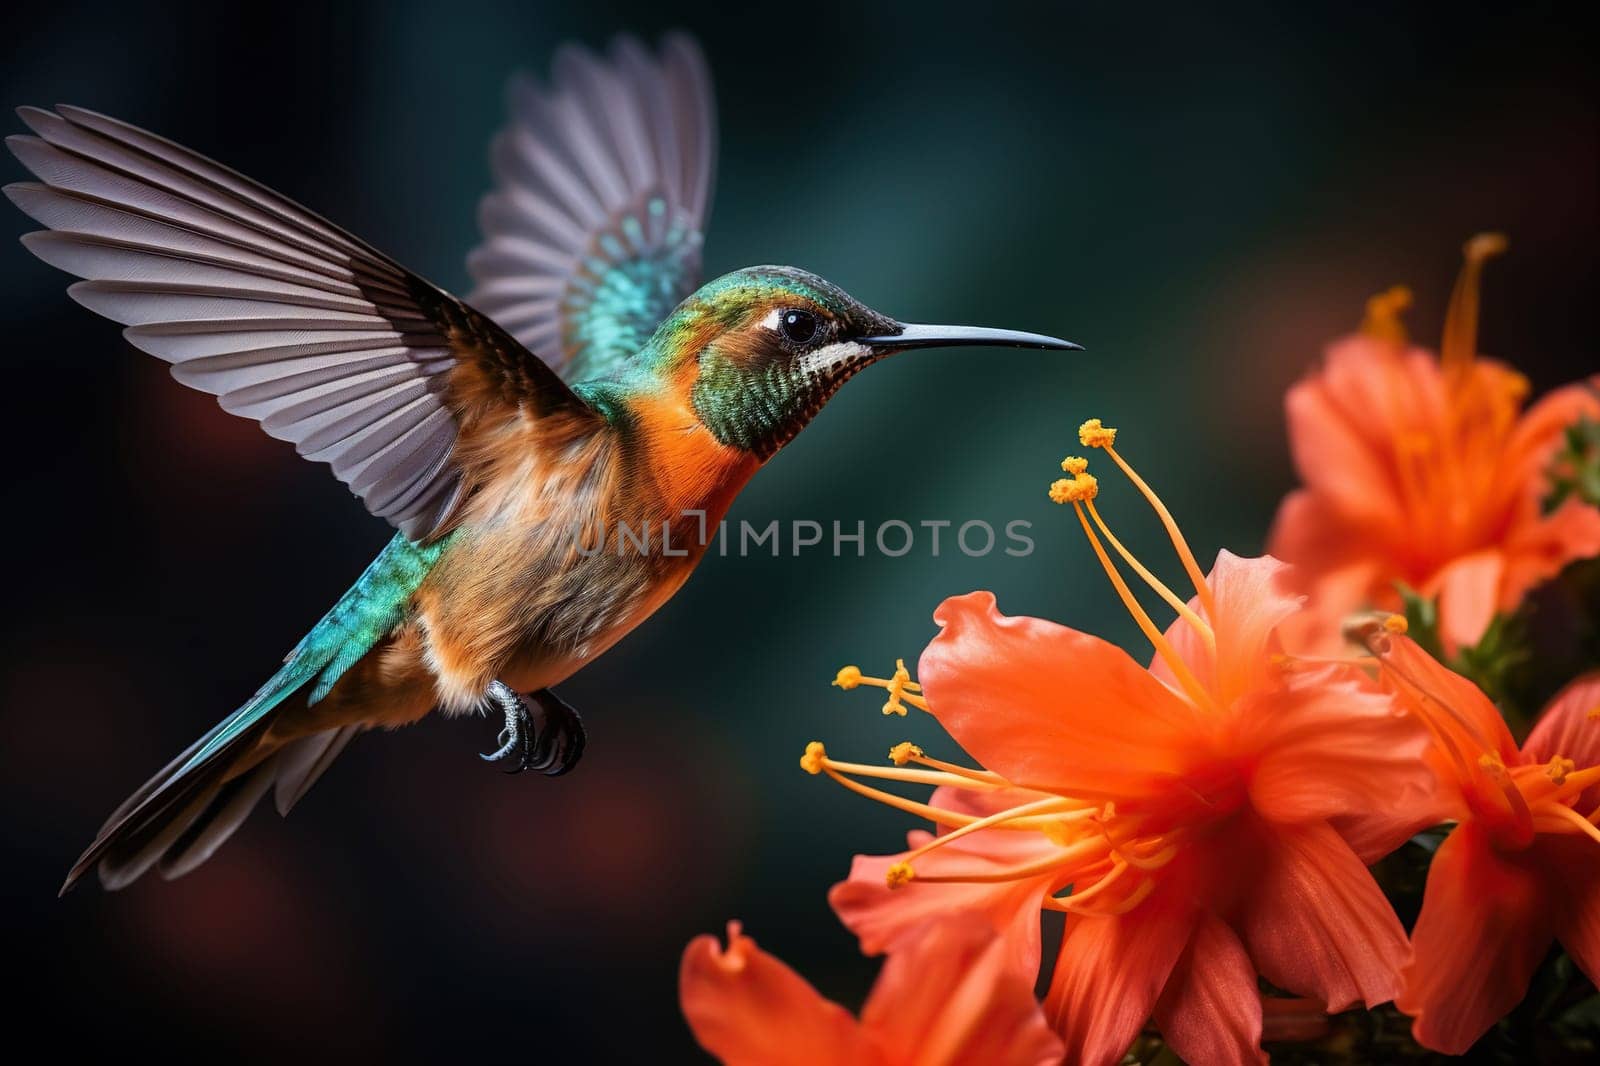 The hummingbird bird drinks nectar from flowers.